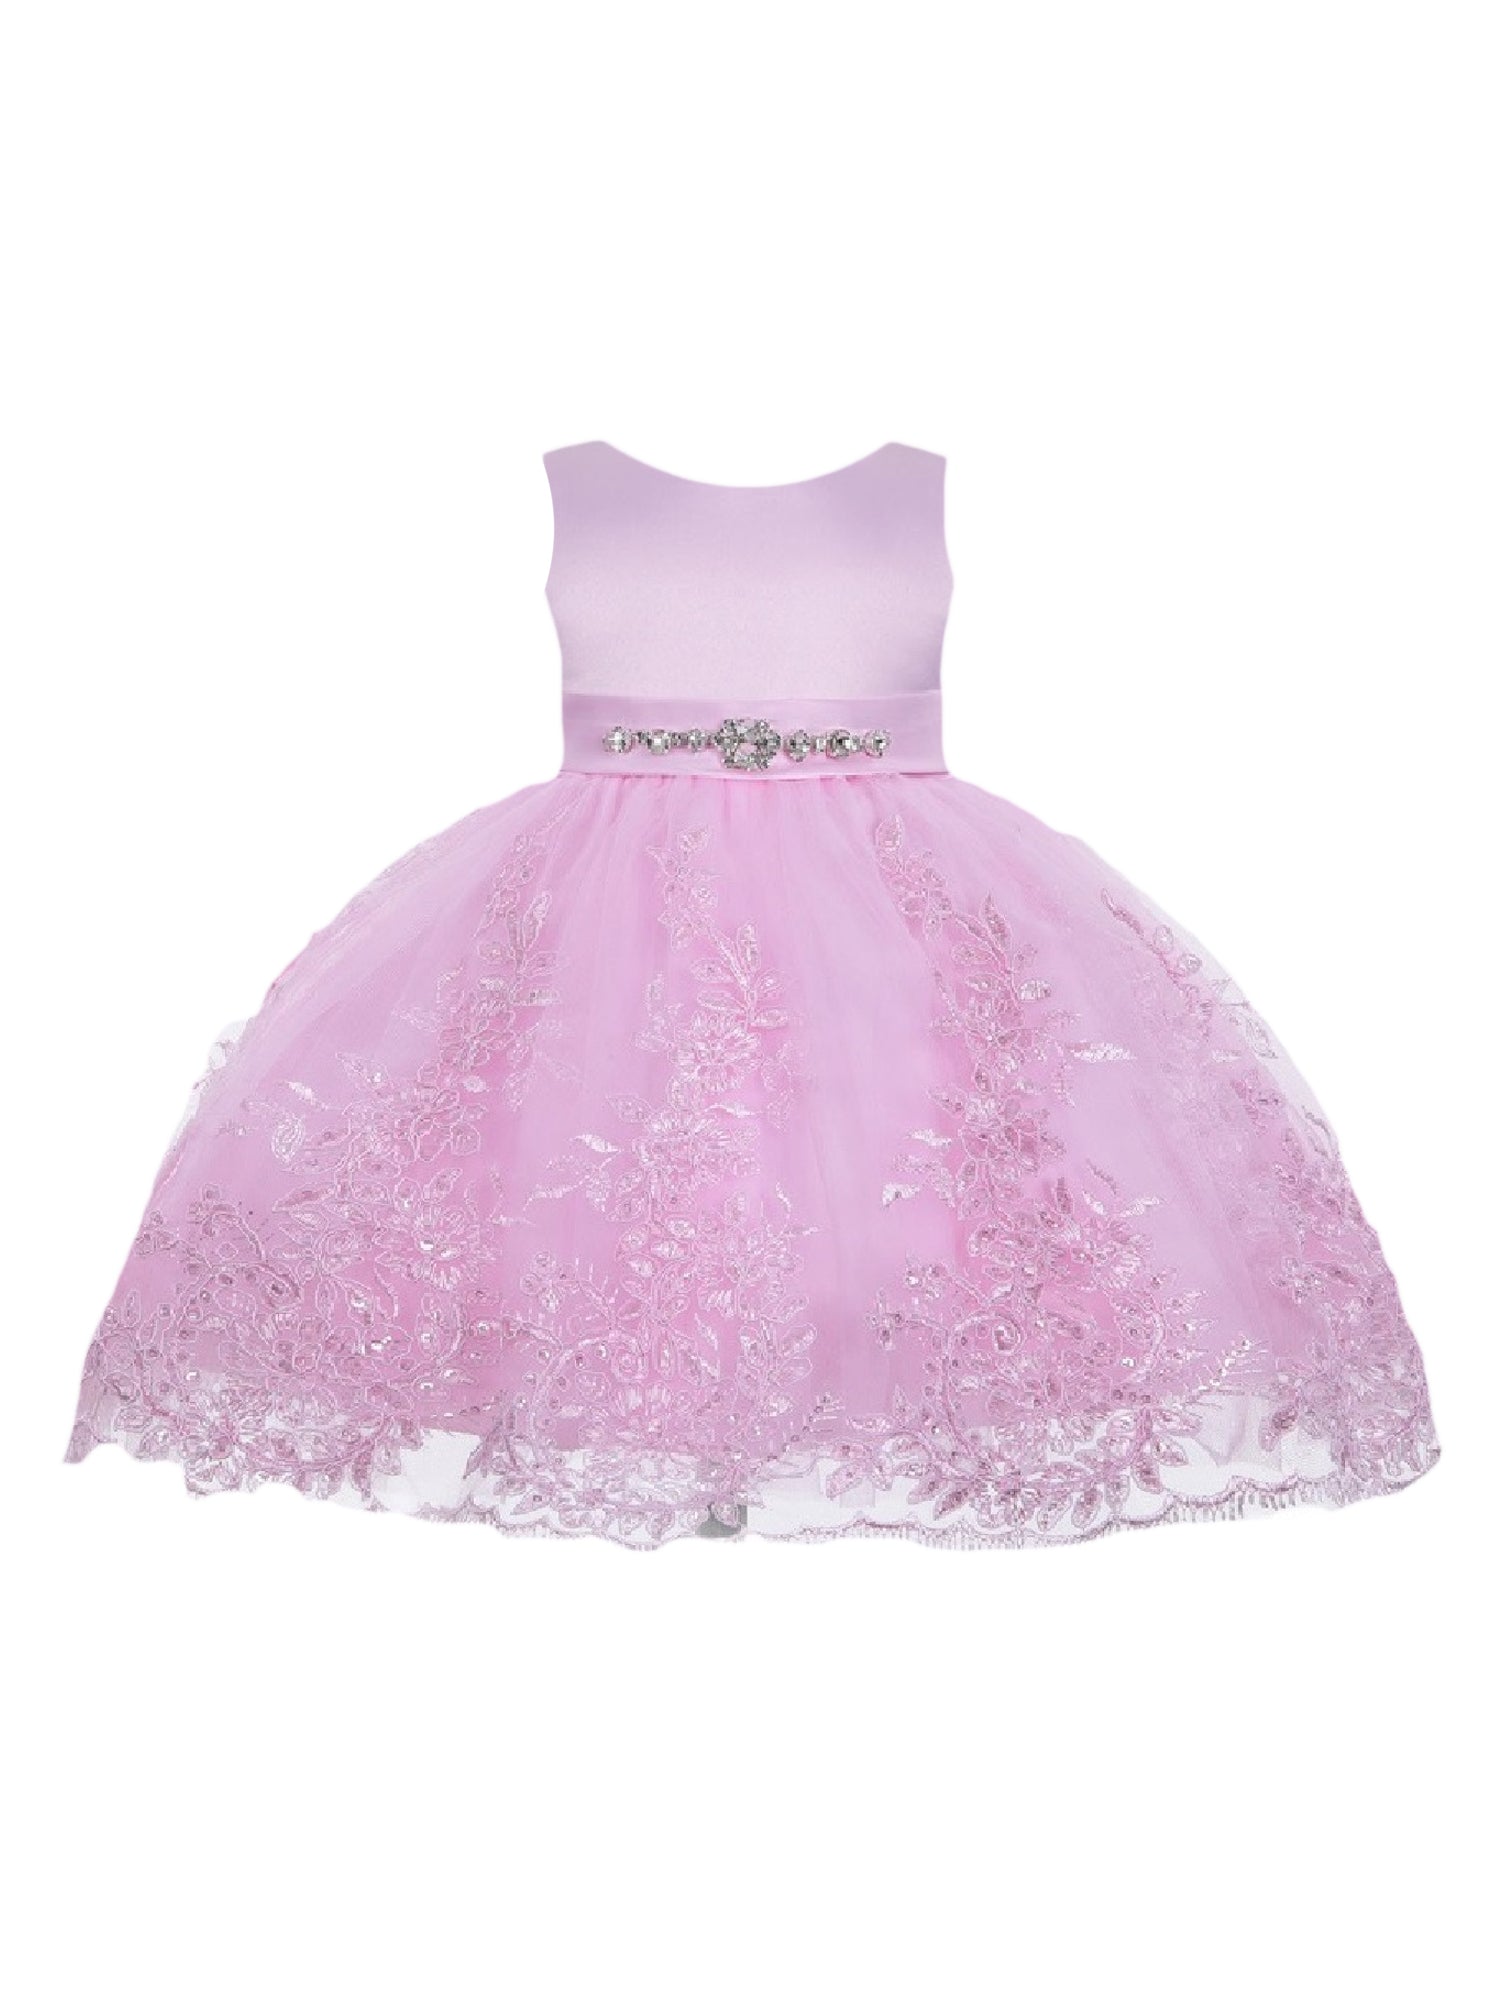 Little Girls Pink Rhinestone Embellished Sash Flower Girl Dress 2T-4T